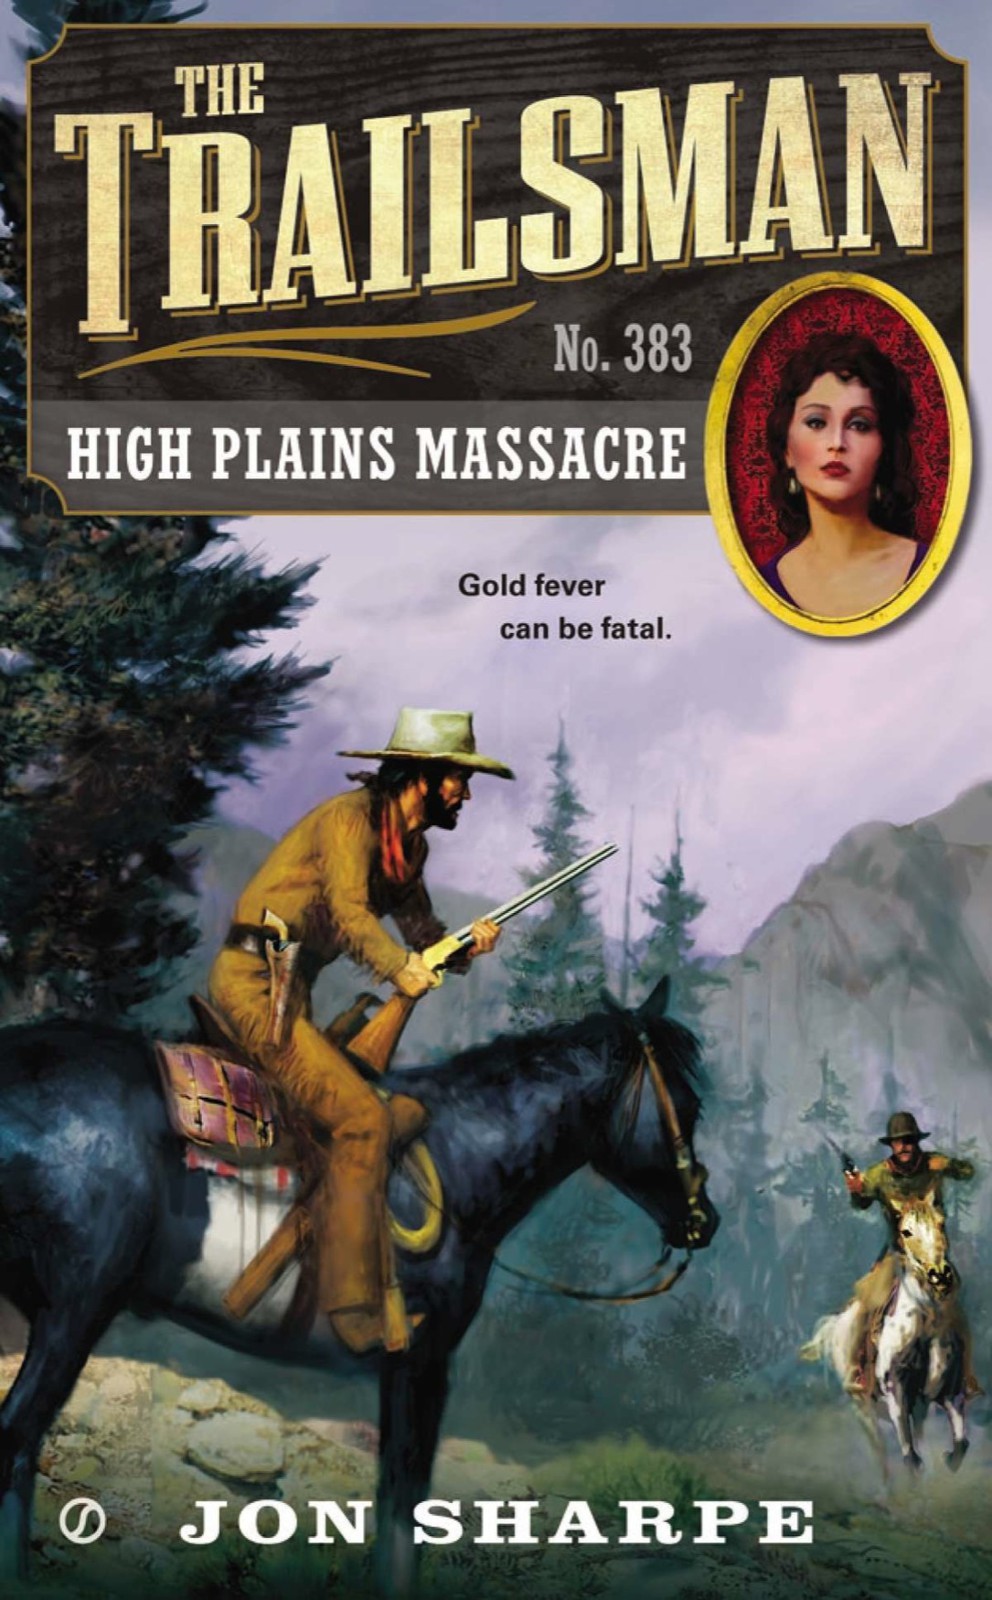 High Plains Massacre by Jon Sharpe